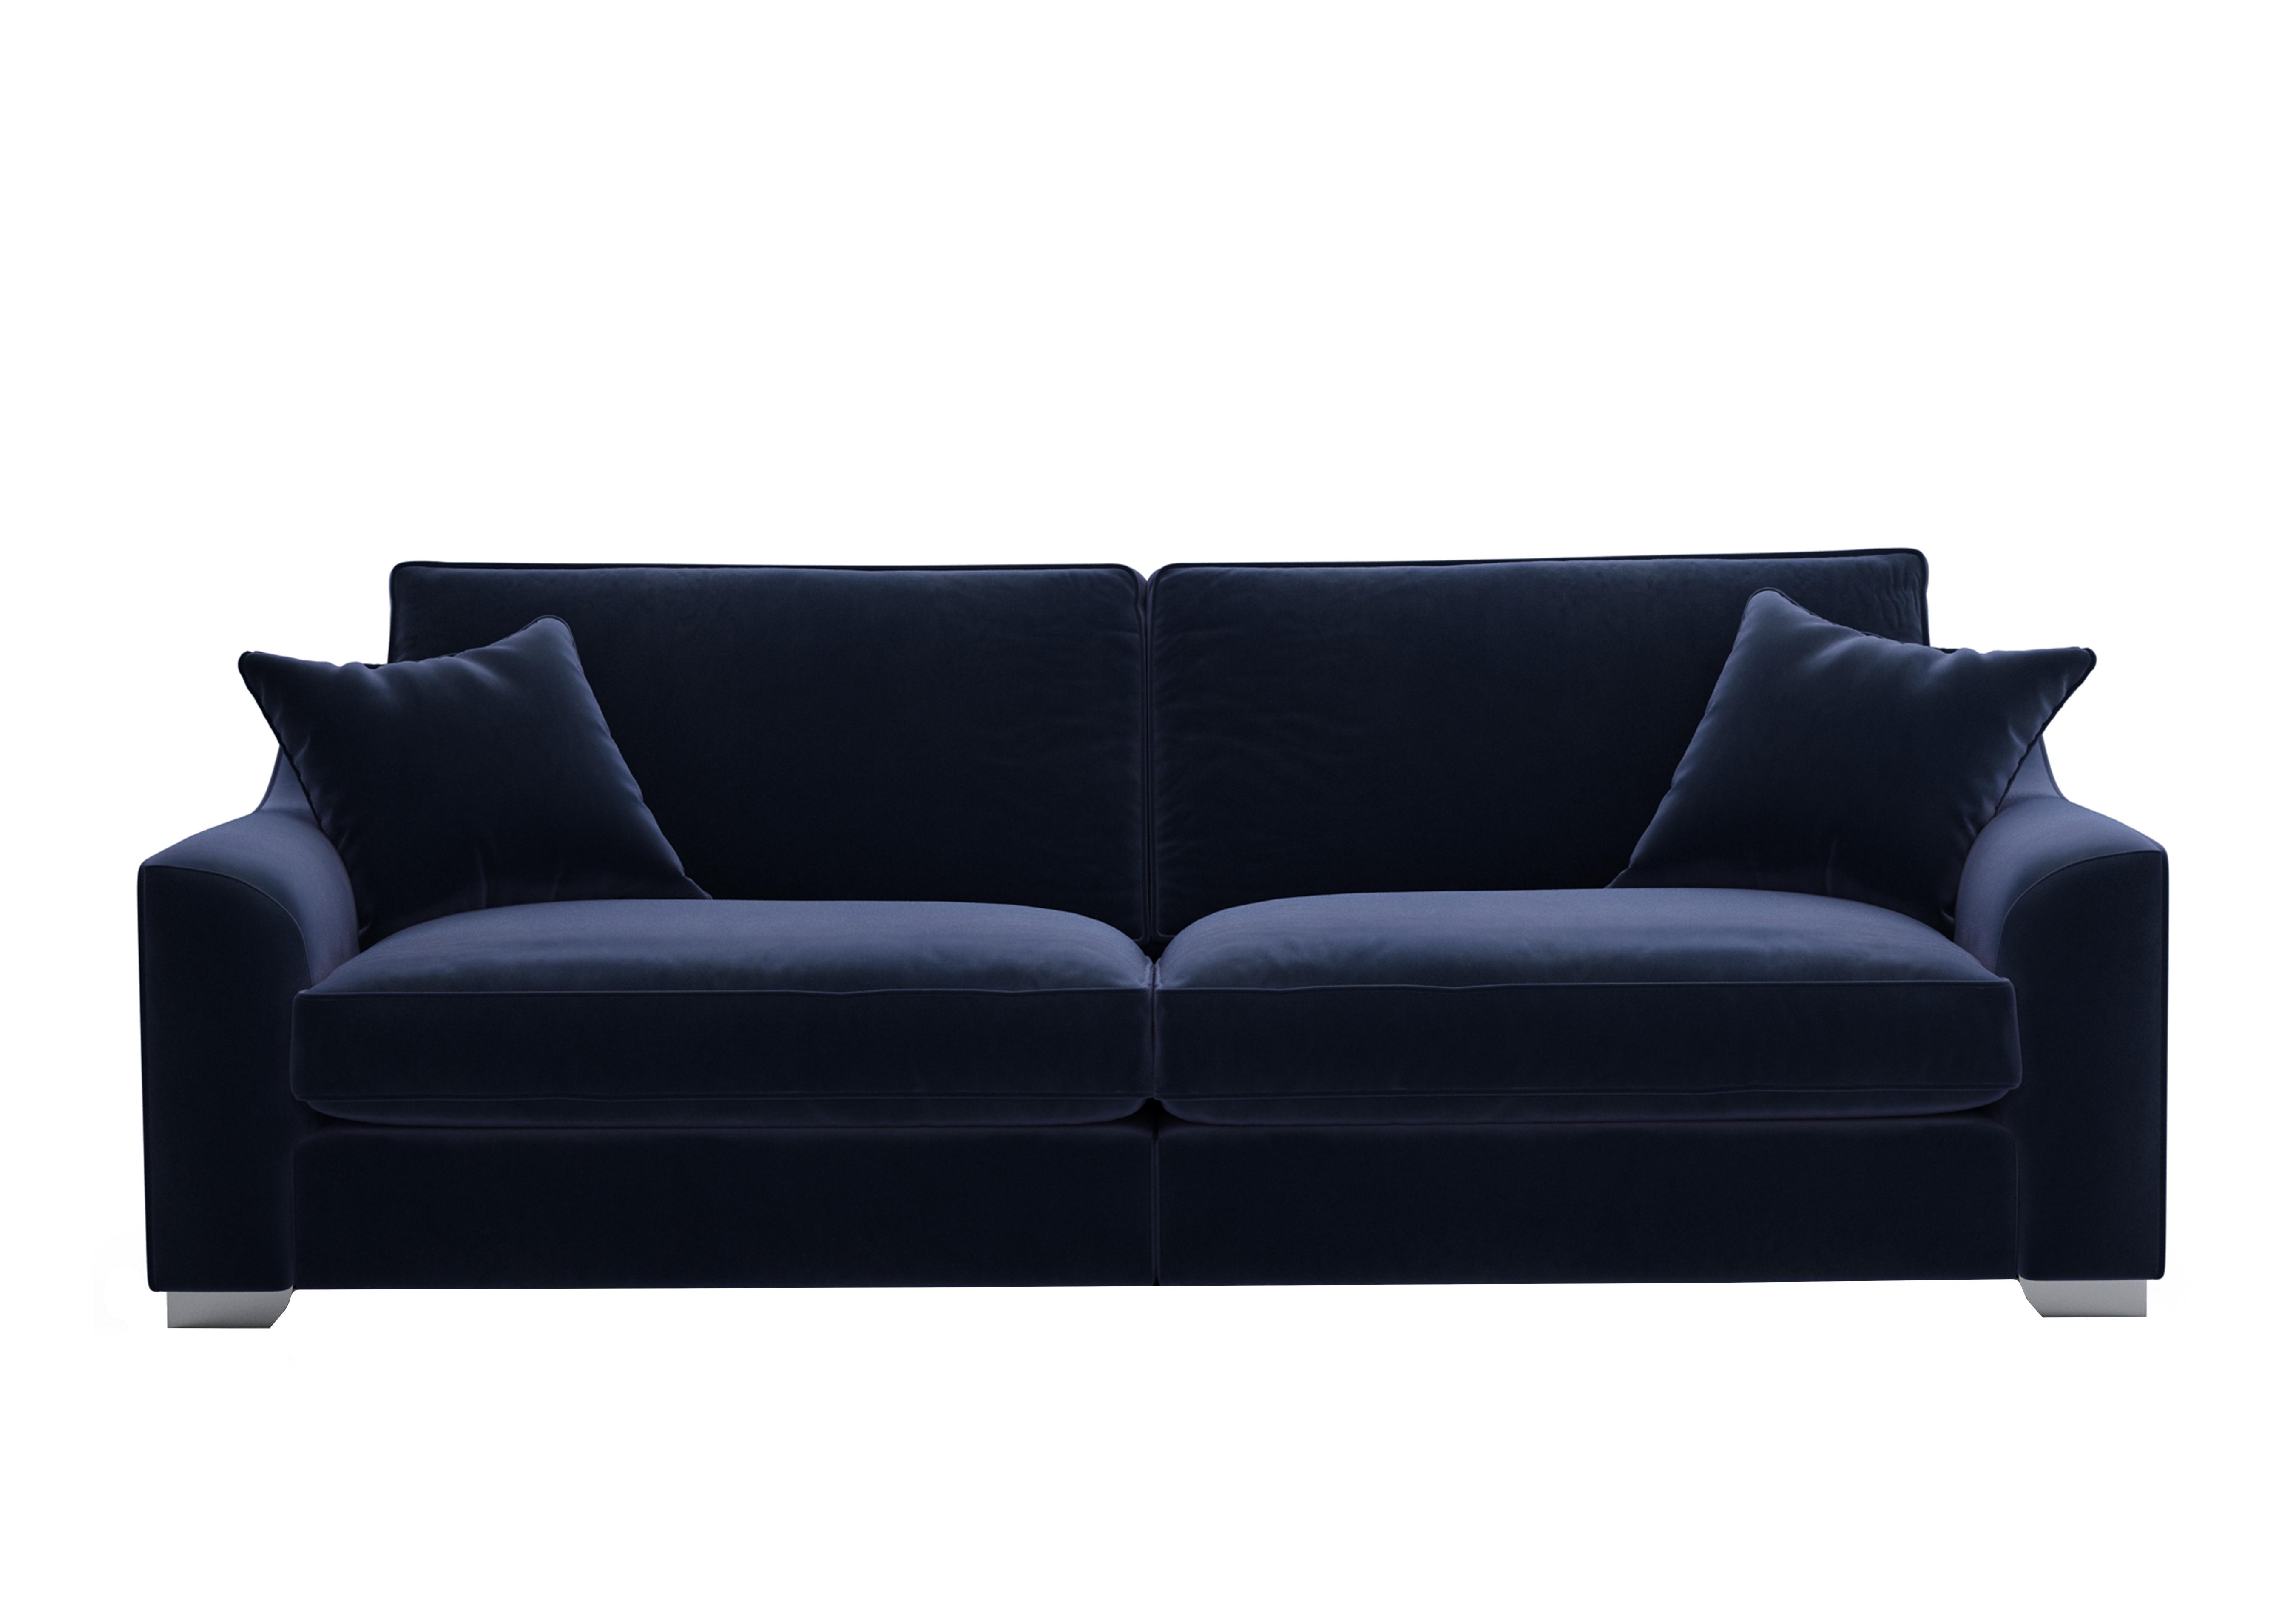 Isobel 4 Seater Fabric Sofa in Mid009 Midnight Indigo Ch Ft on Furniture Village